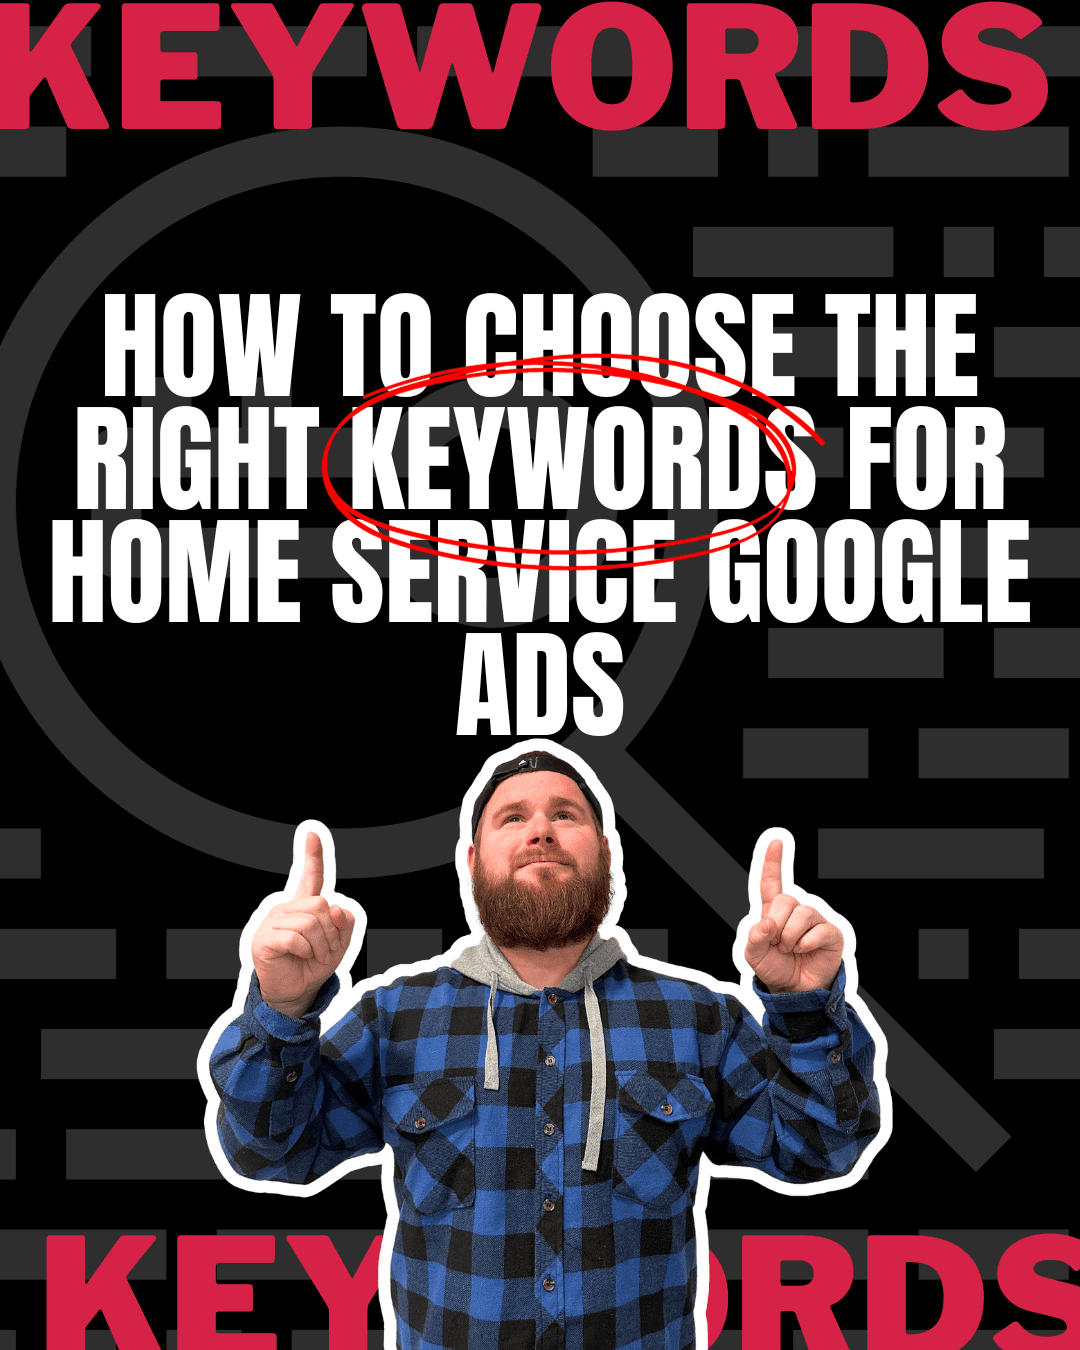 Keywords for Home Service Google Ads